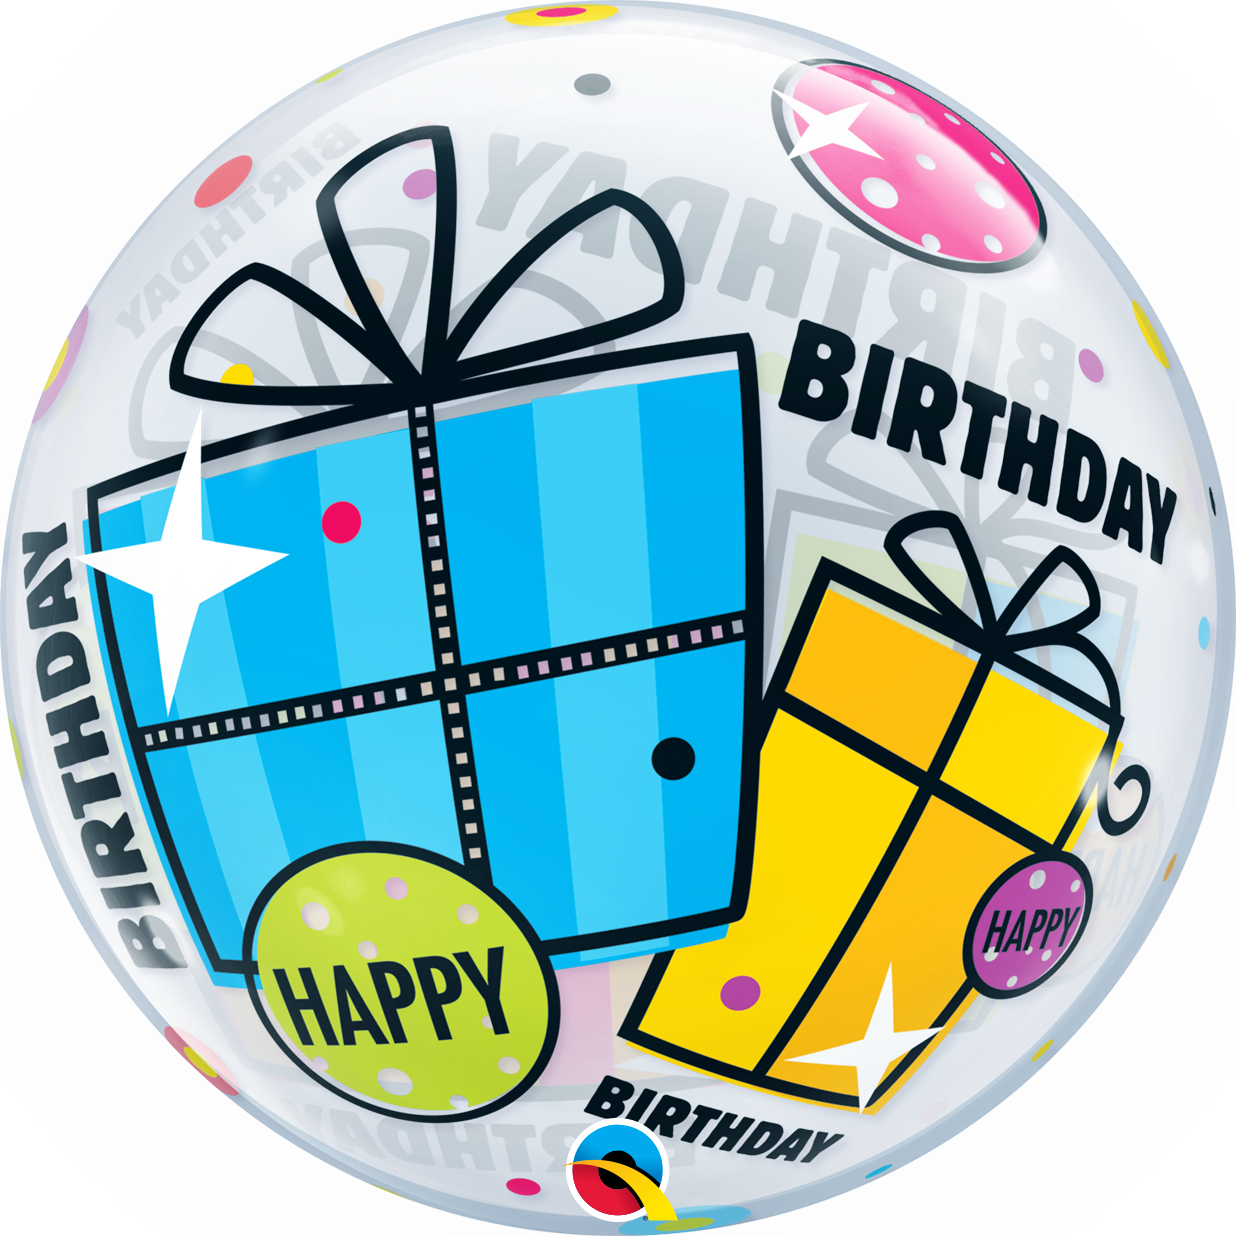 Birthday Fun & Funky Gifts Bubble Balloon